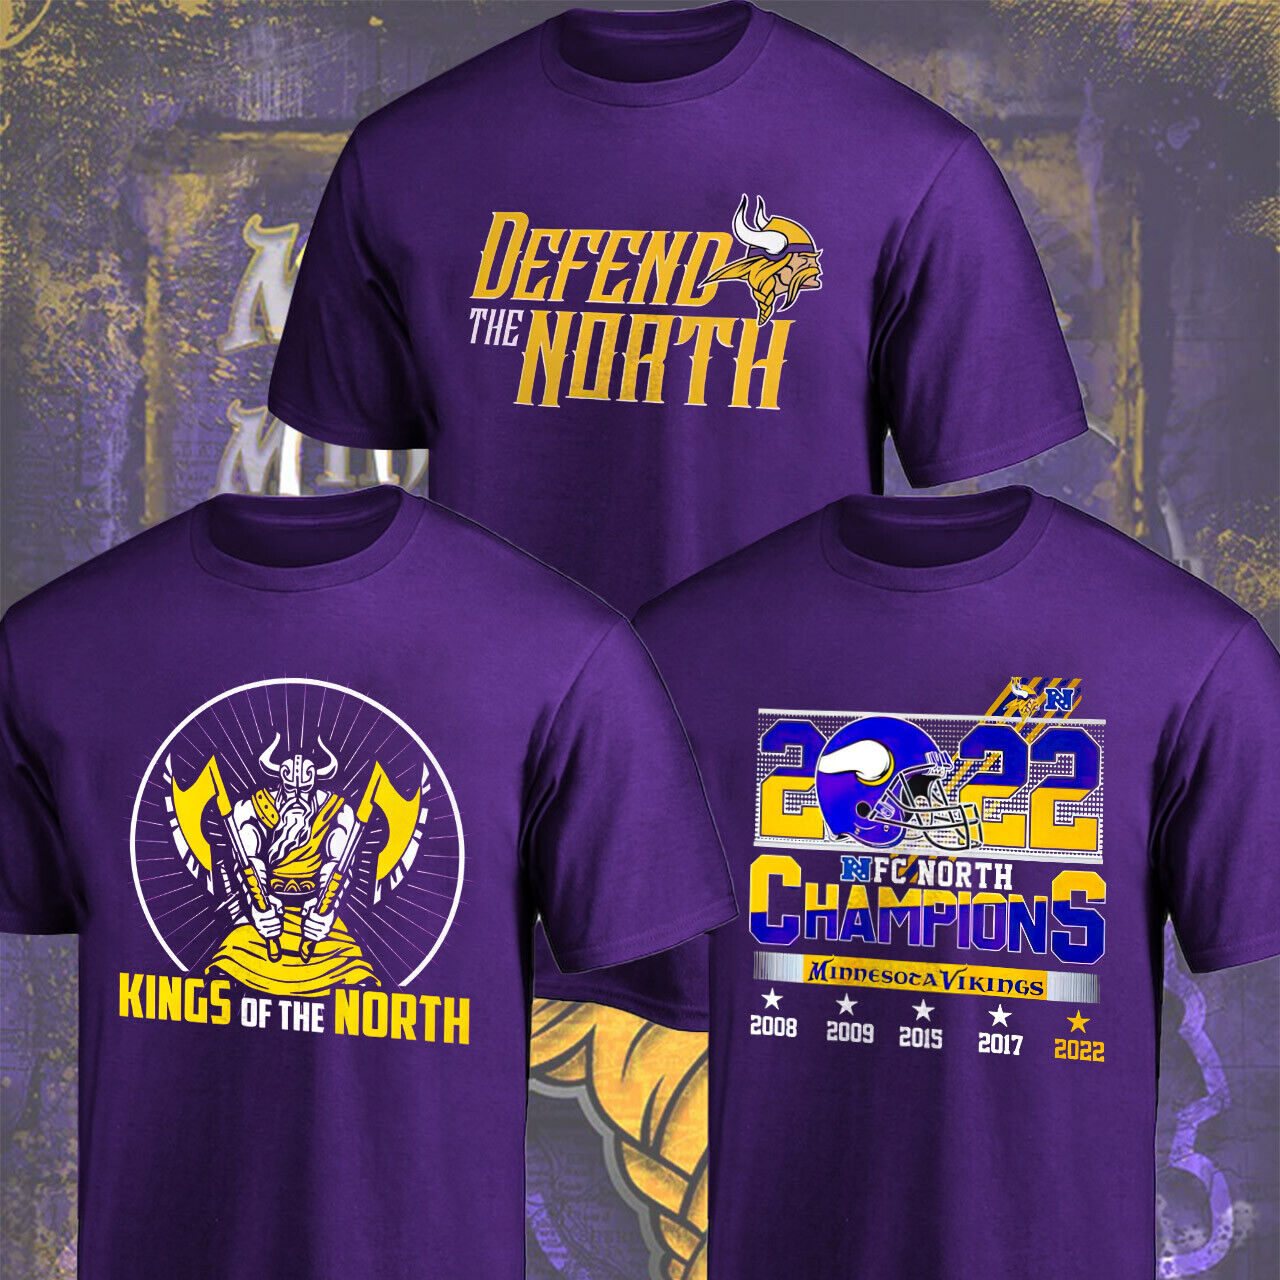 SALE 30%!! Minnesota Vikings 2022 North Football Champs Trophy T-Shirt S-5XL